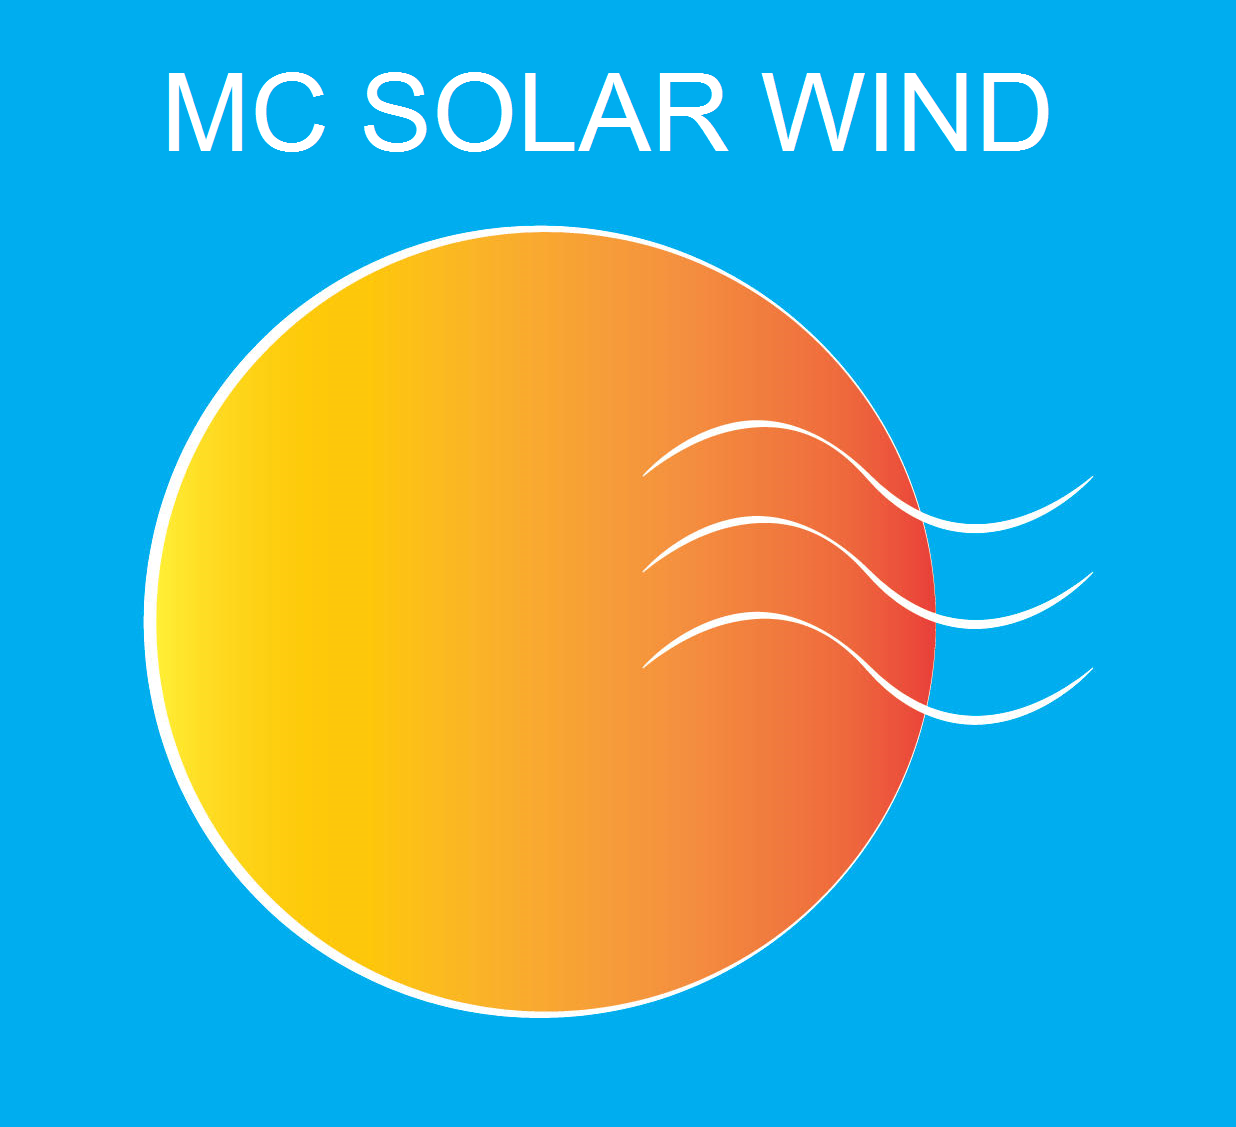 mc solar wind – breathe life